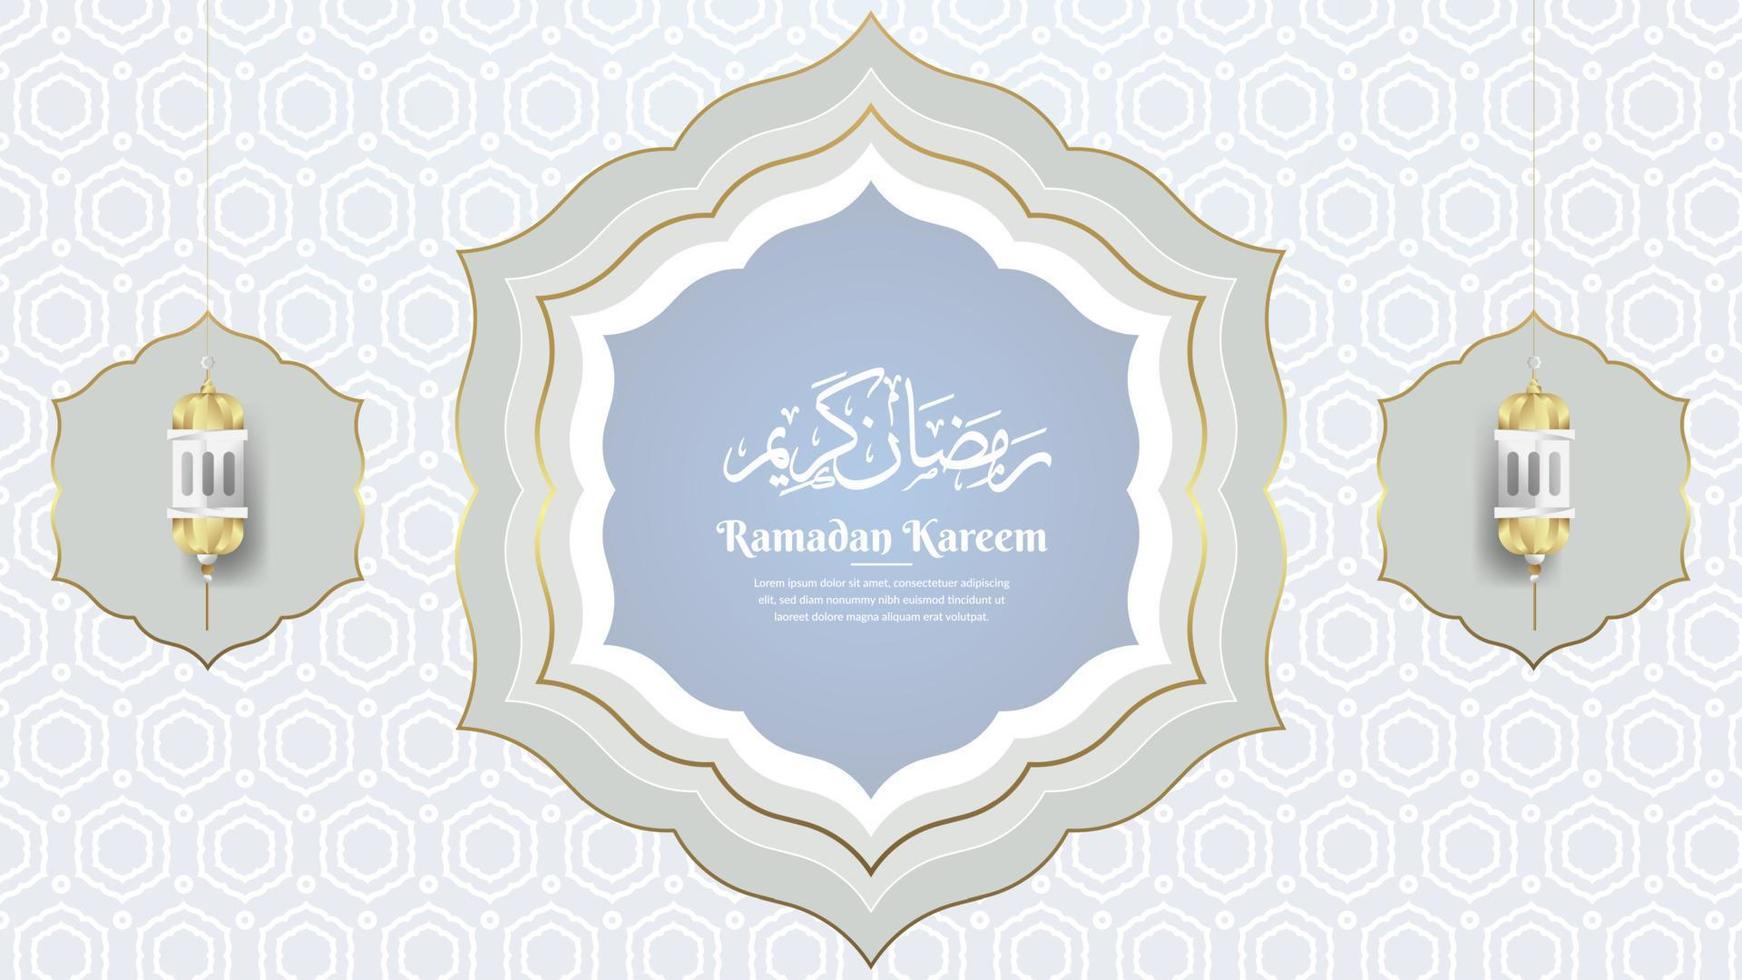 Ramadan kareem background with lantern vector